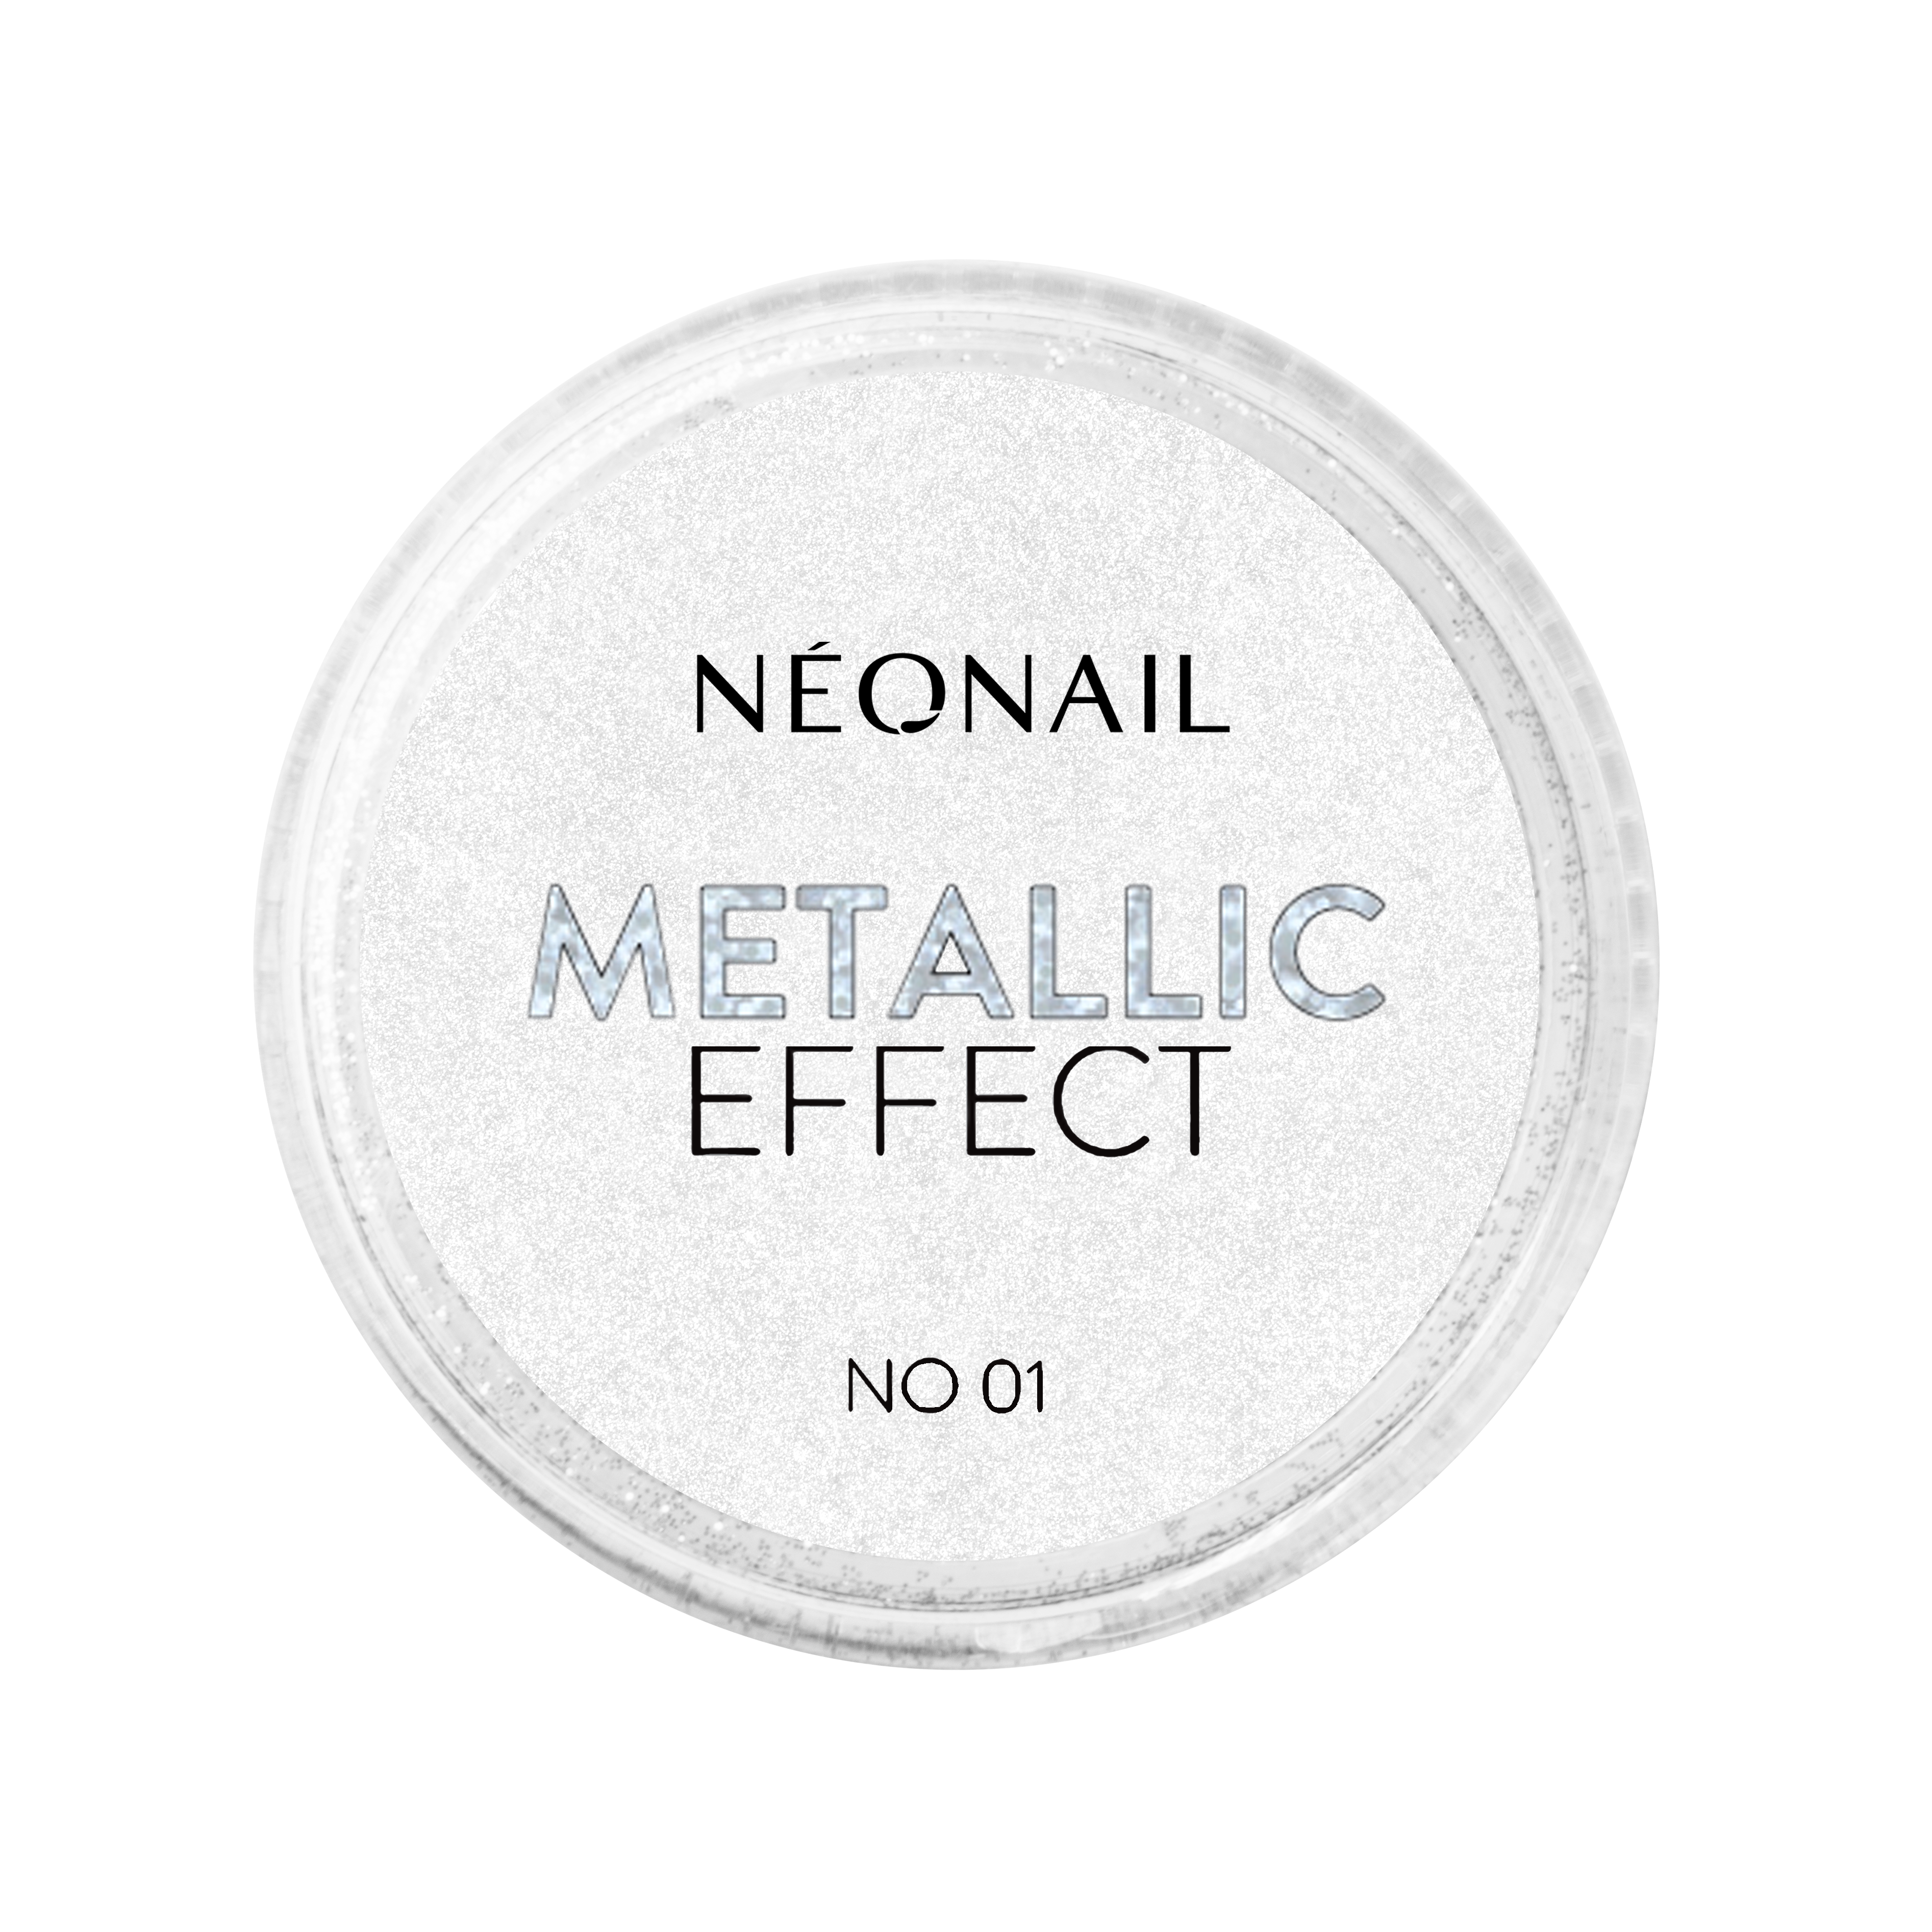 Neglepynt - Metallic Effect - 01-NeoNail-NR Kosmetik